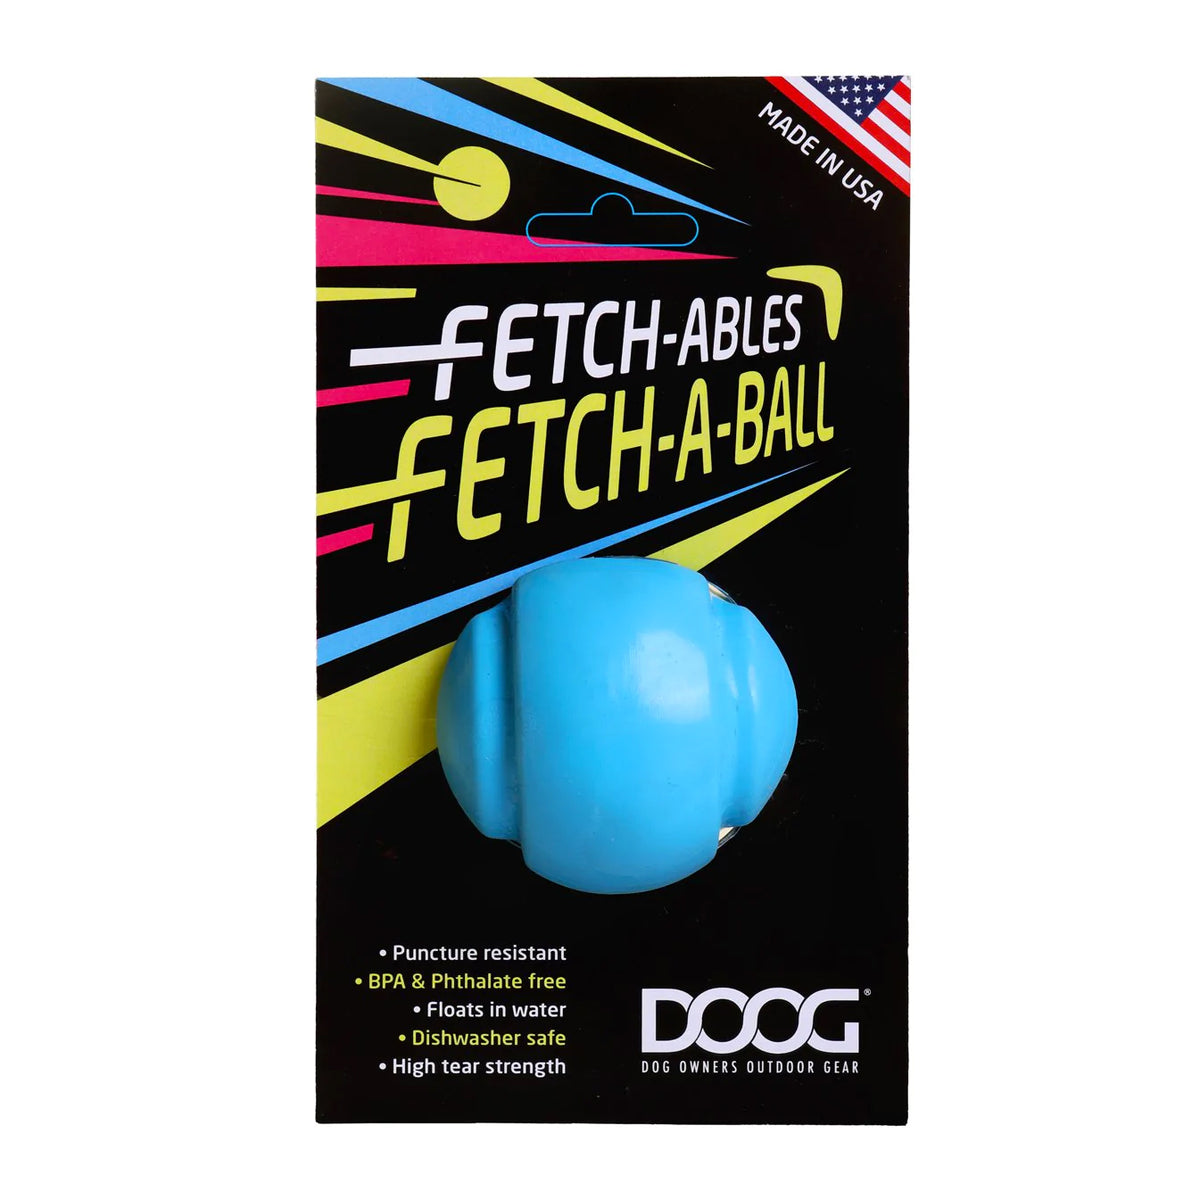 DOOG Fetchables - Fetch-a-Ball